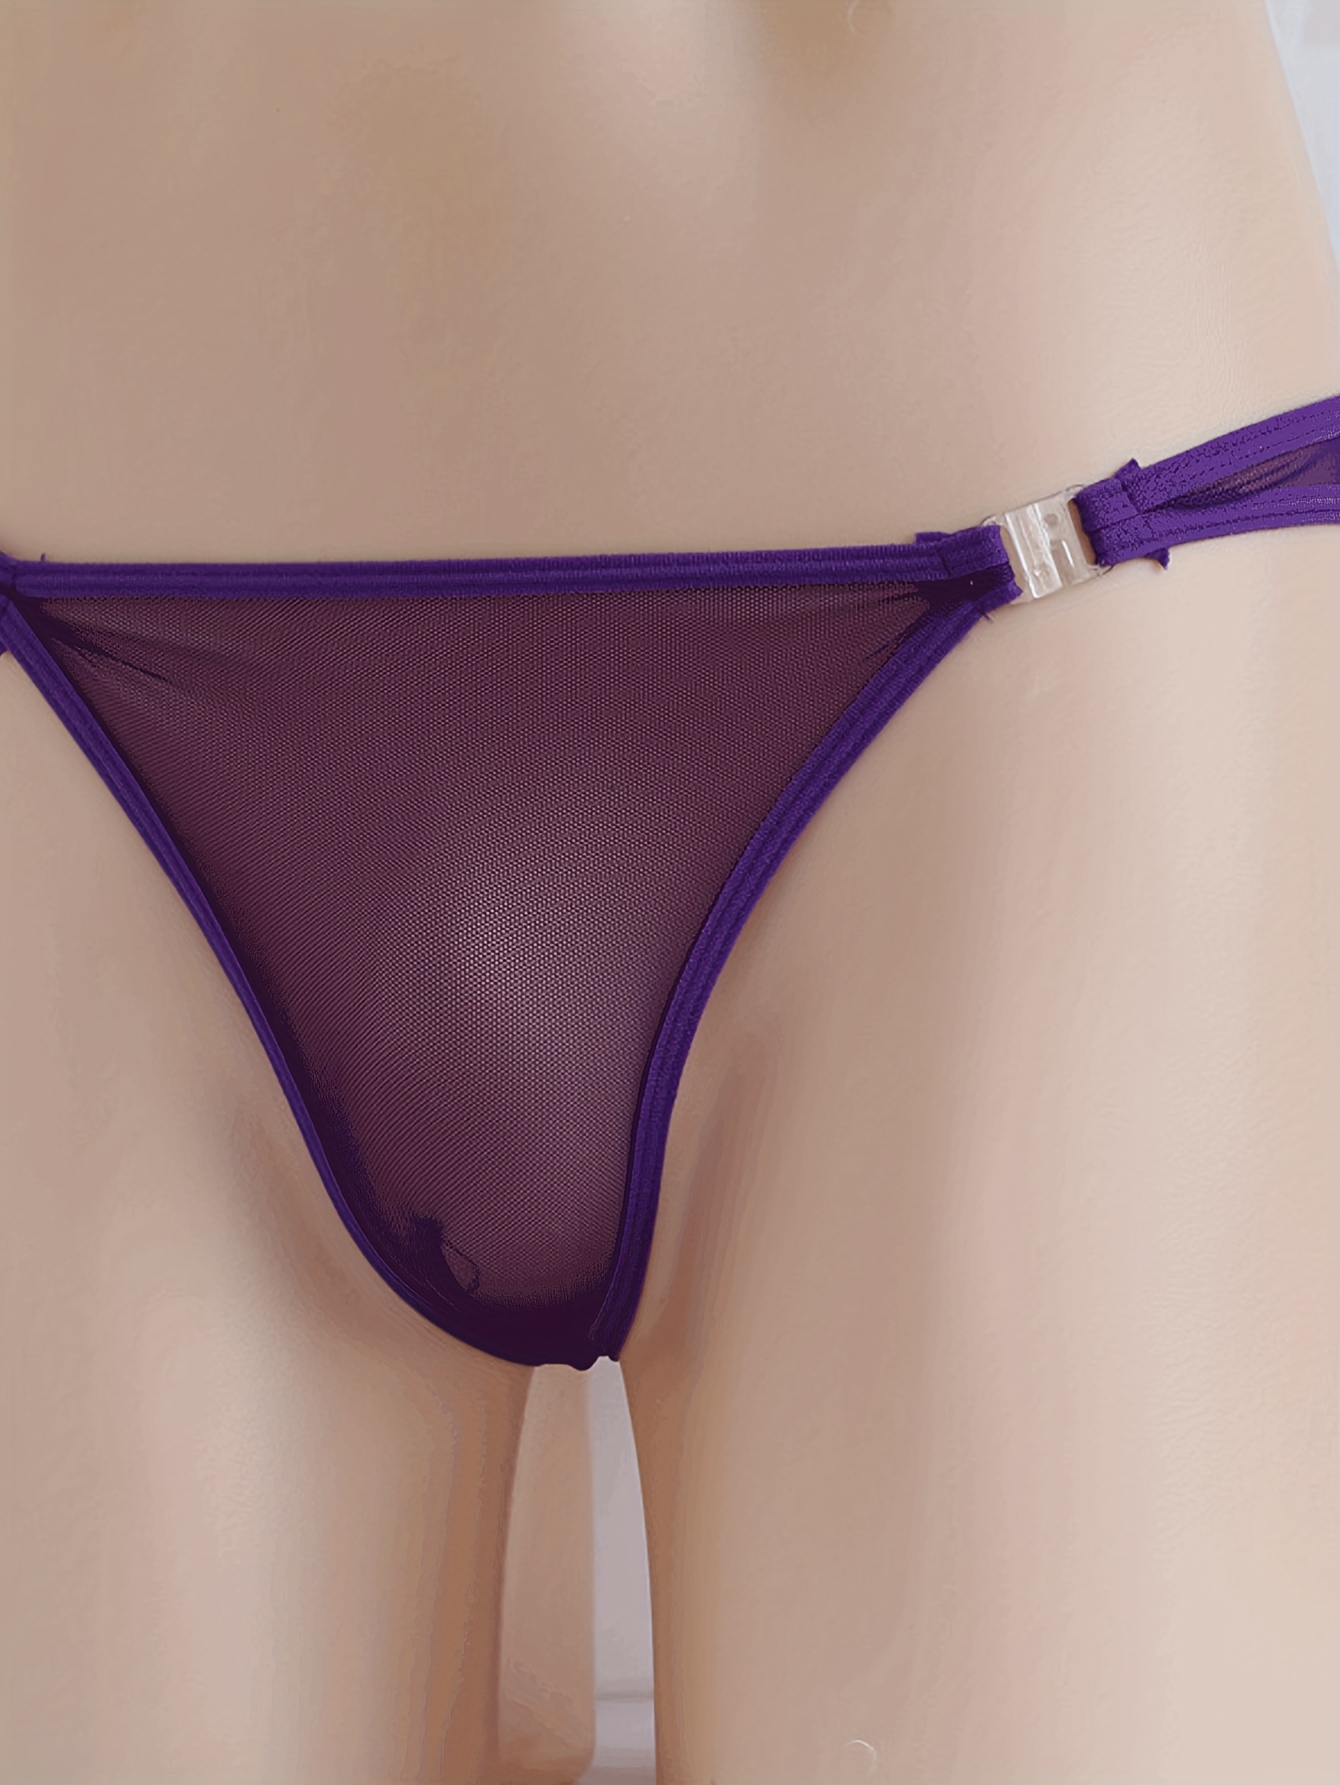 Women Sexy See-through Panties Ladies Low rise Briefs Bikinis Thongs  Underwear